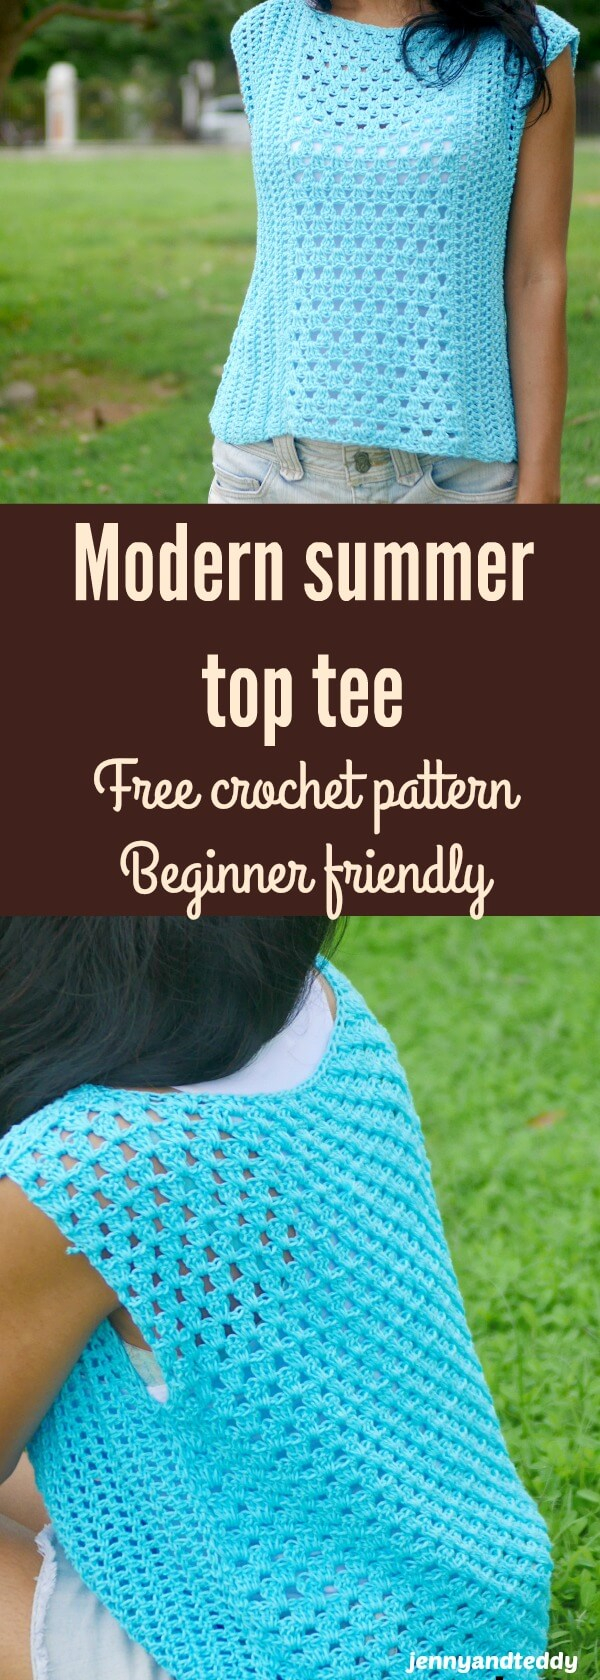 Modern Crochet Patterns Free Modern Summer Top Tee Free Crochet Pattern